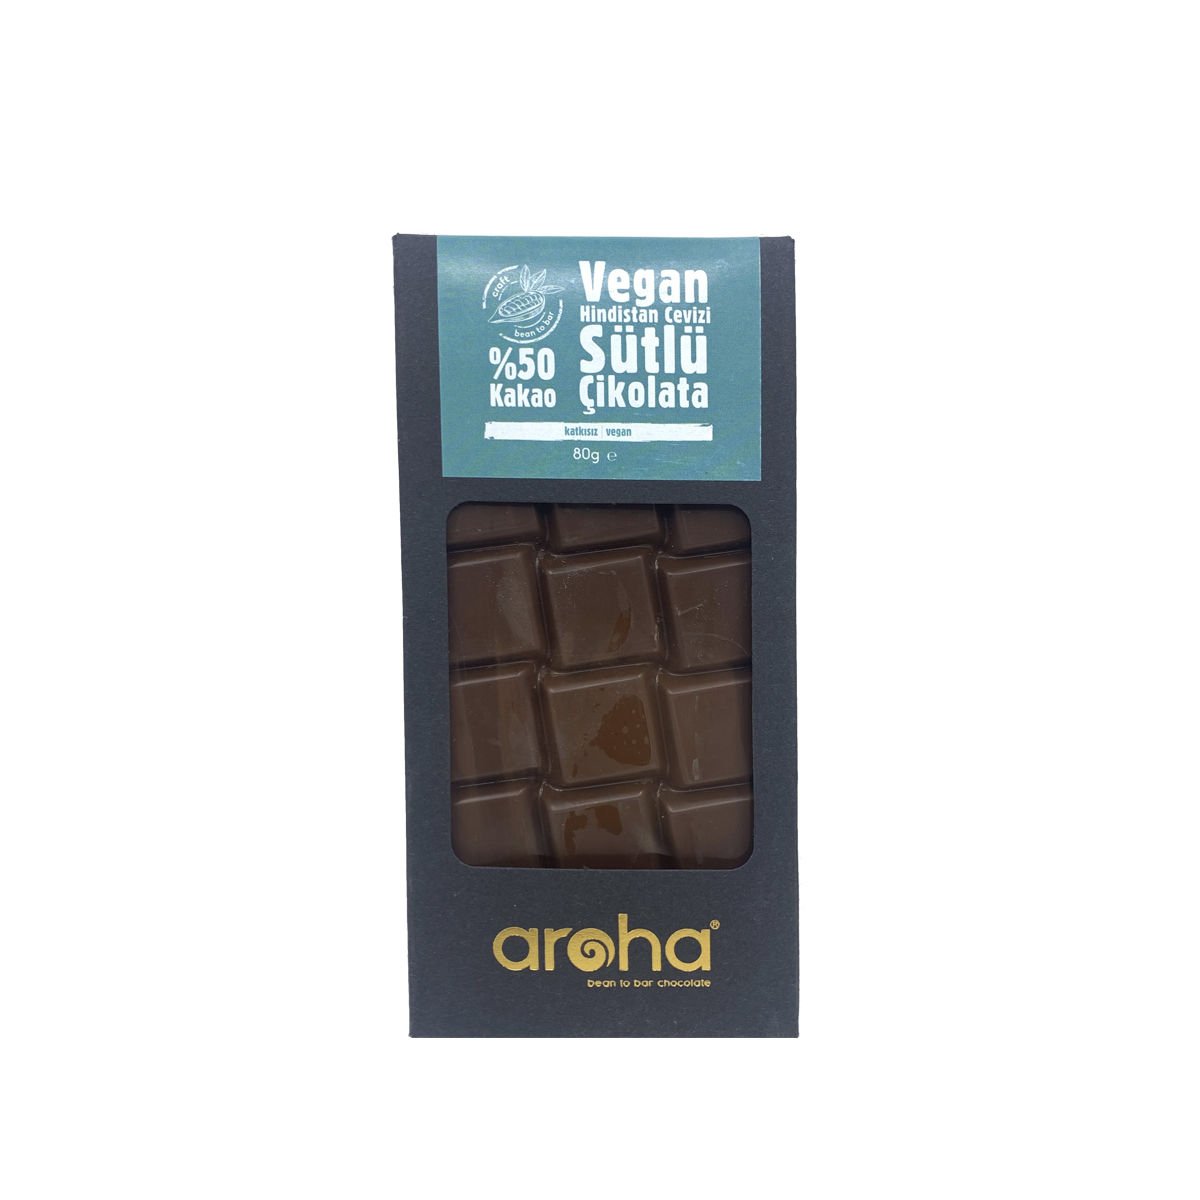 Aroha Vegan Hindistan Cevizi Sütlü Çikolata %50 Kakao 80 g